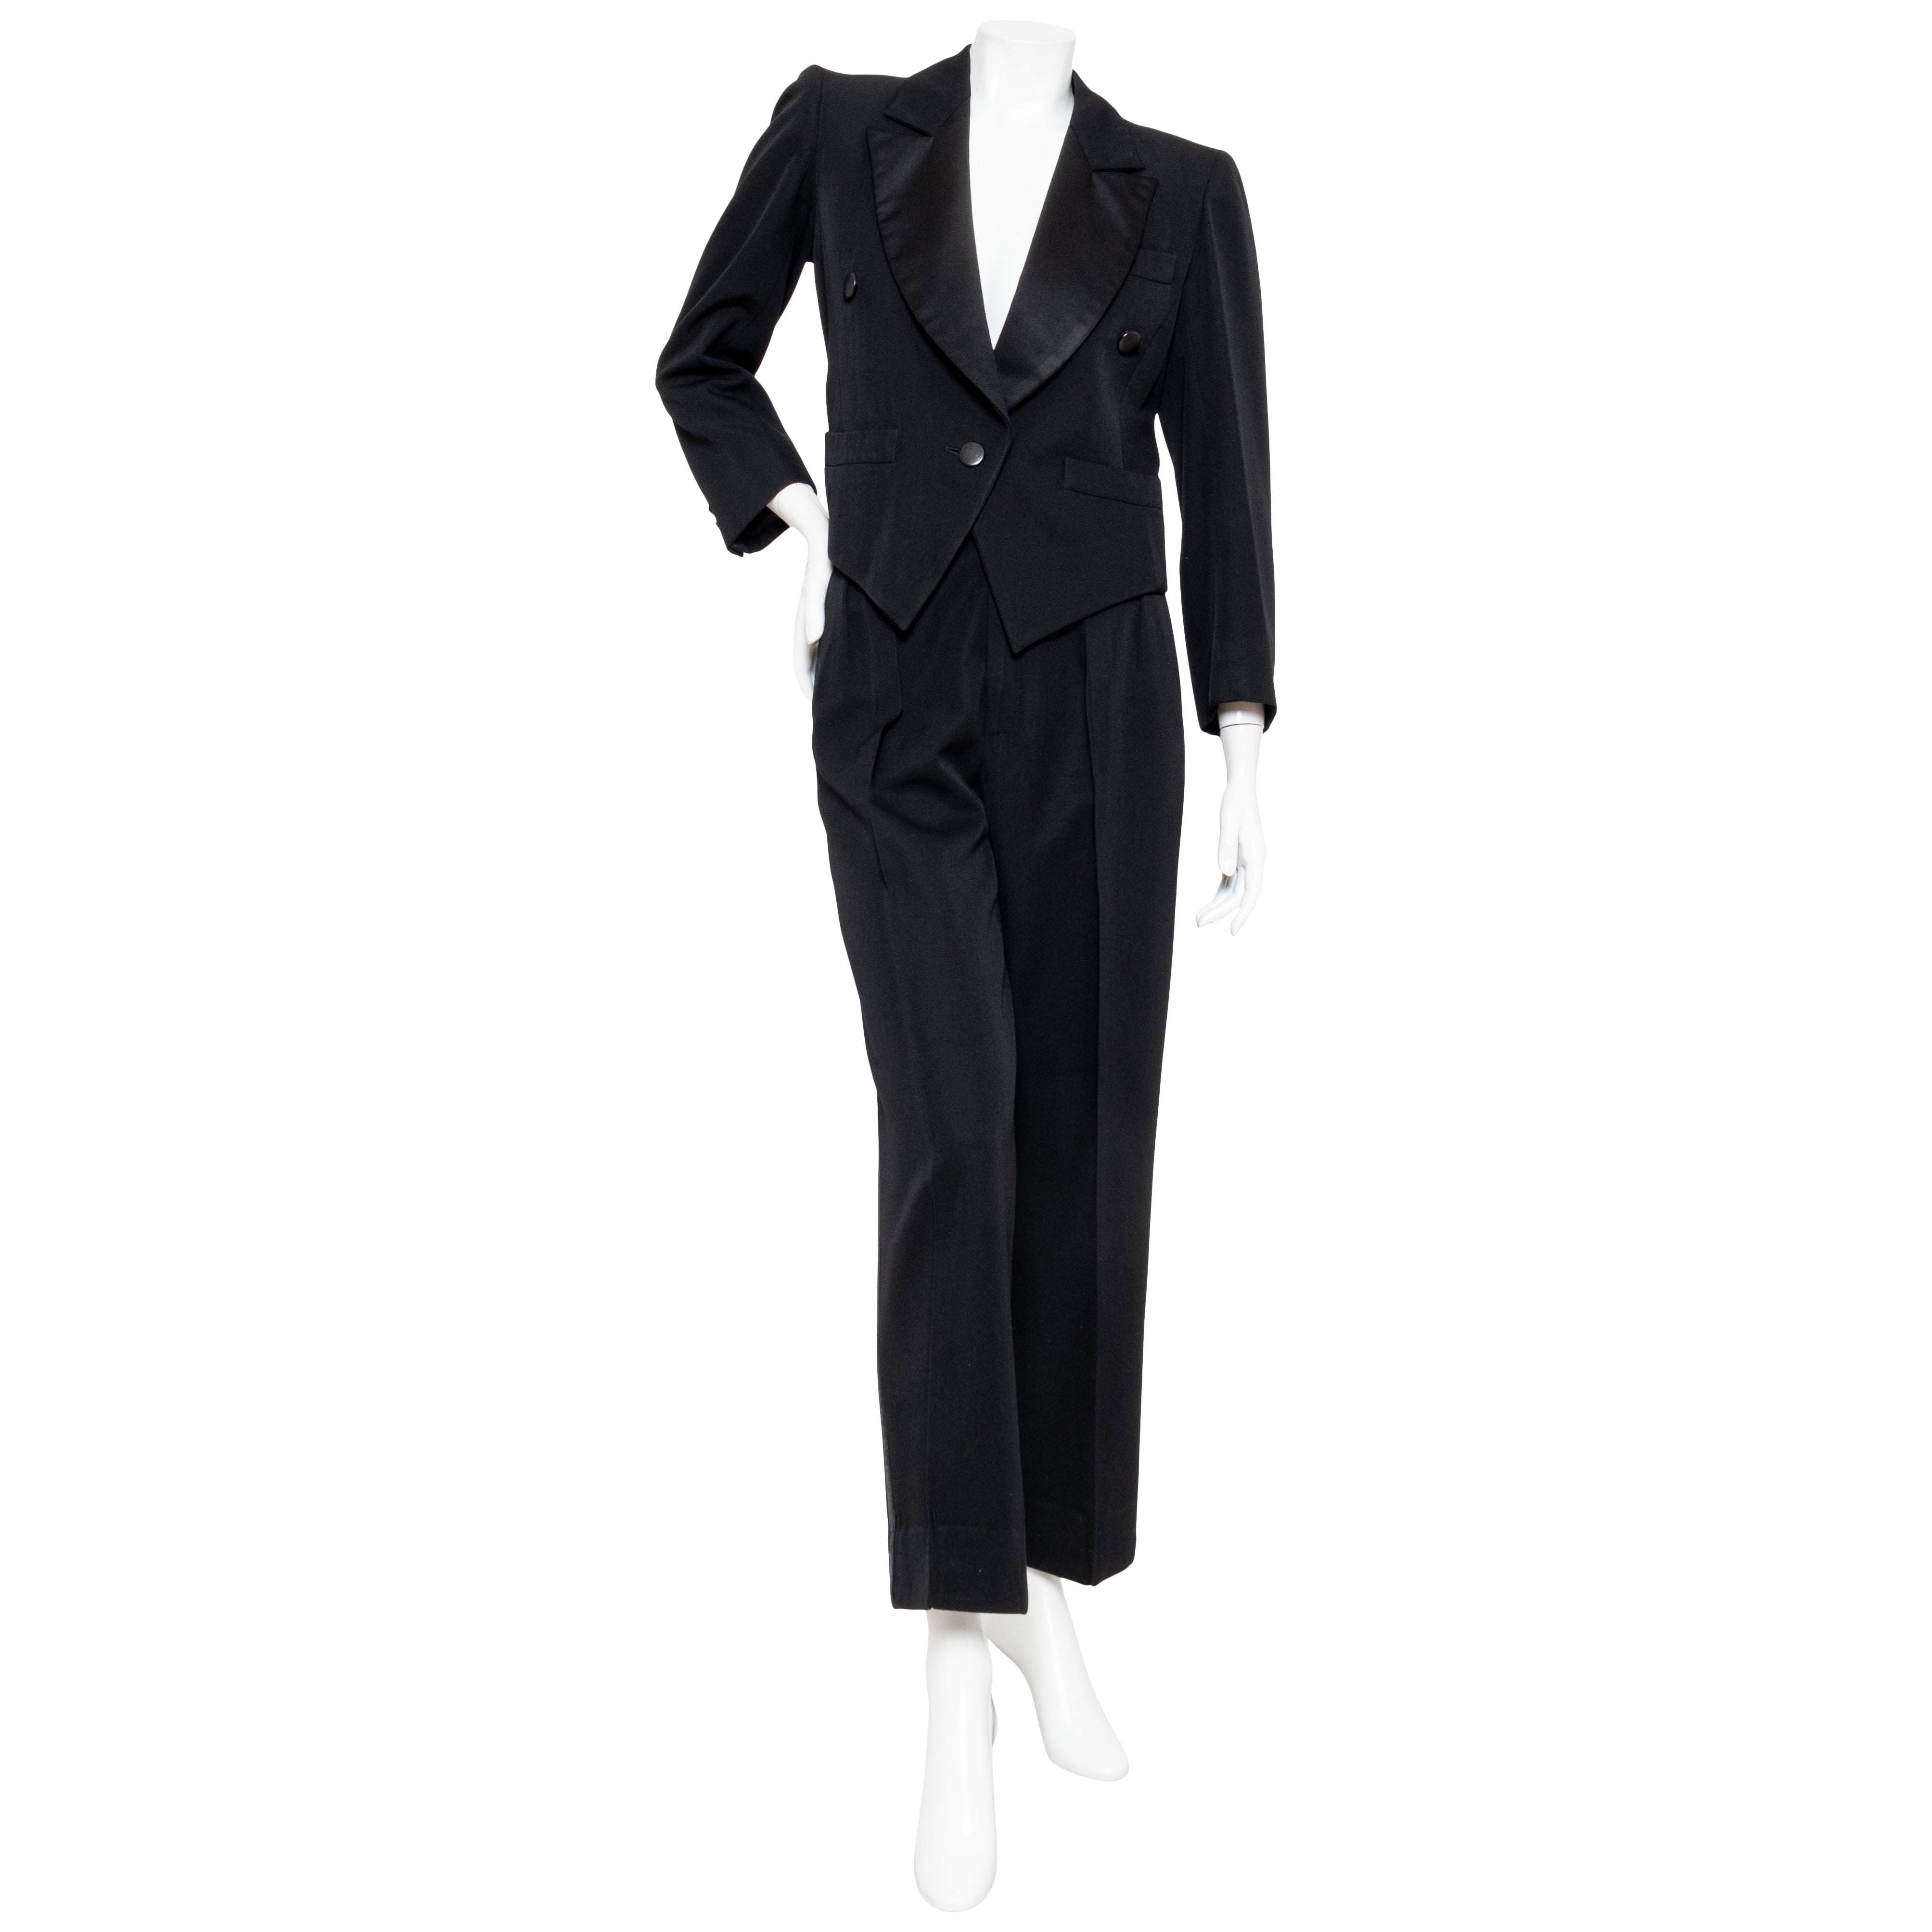 Late 1970s Women's Black Wool Smoking Tuxedo – Decades Inc.